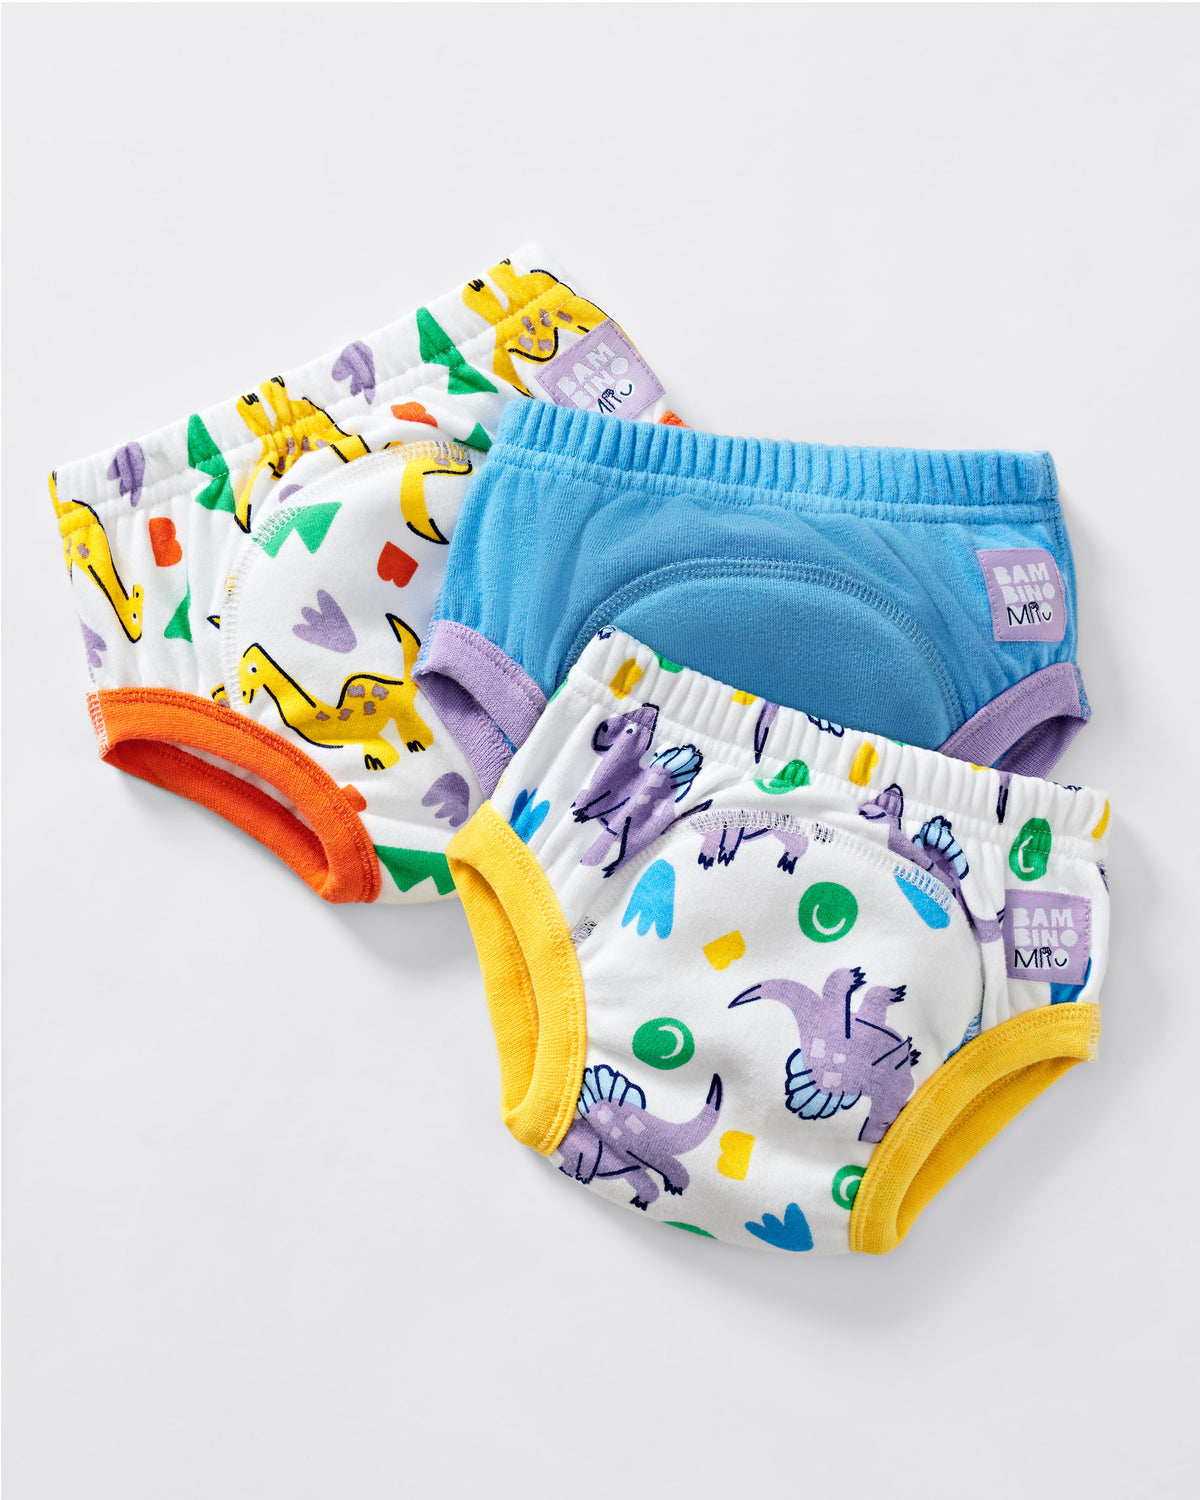  Bambino mio, Potty training underwear for girls and